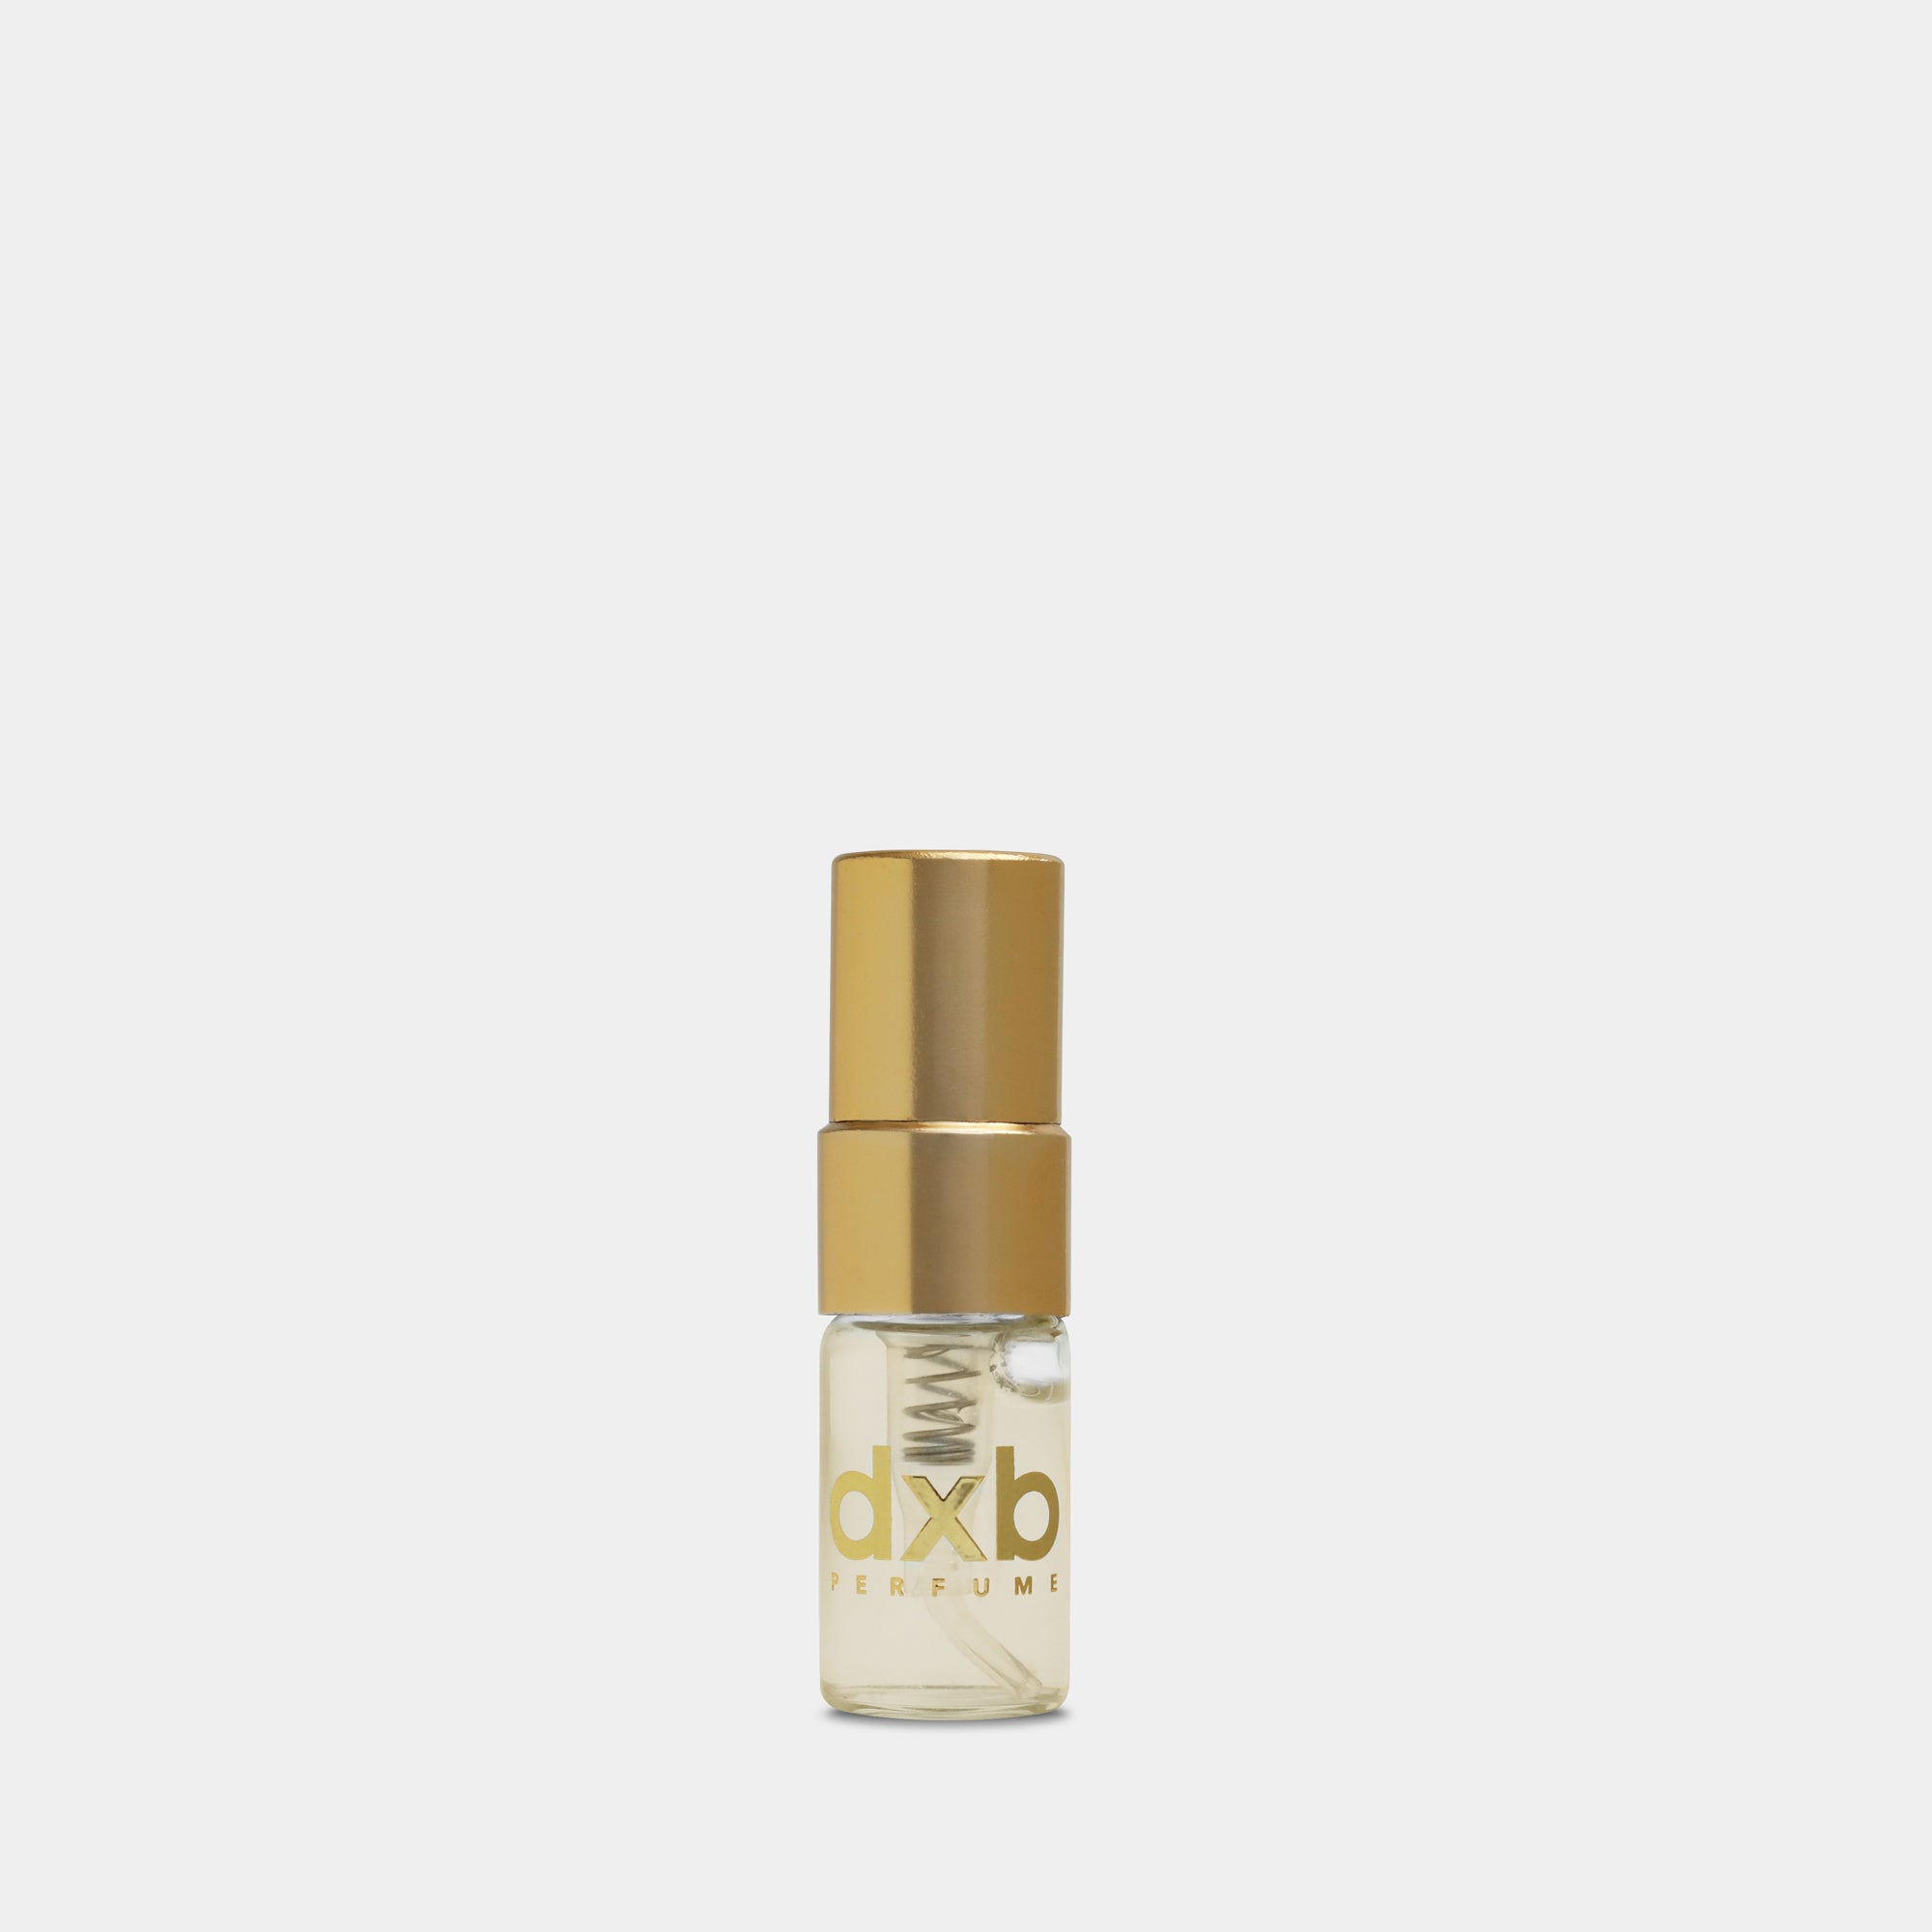 Elite Perfumery Gold Elixir sample